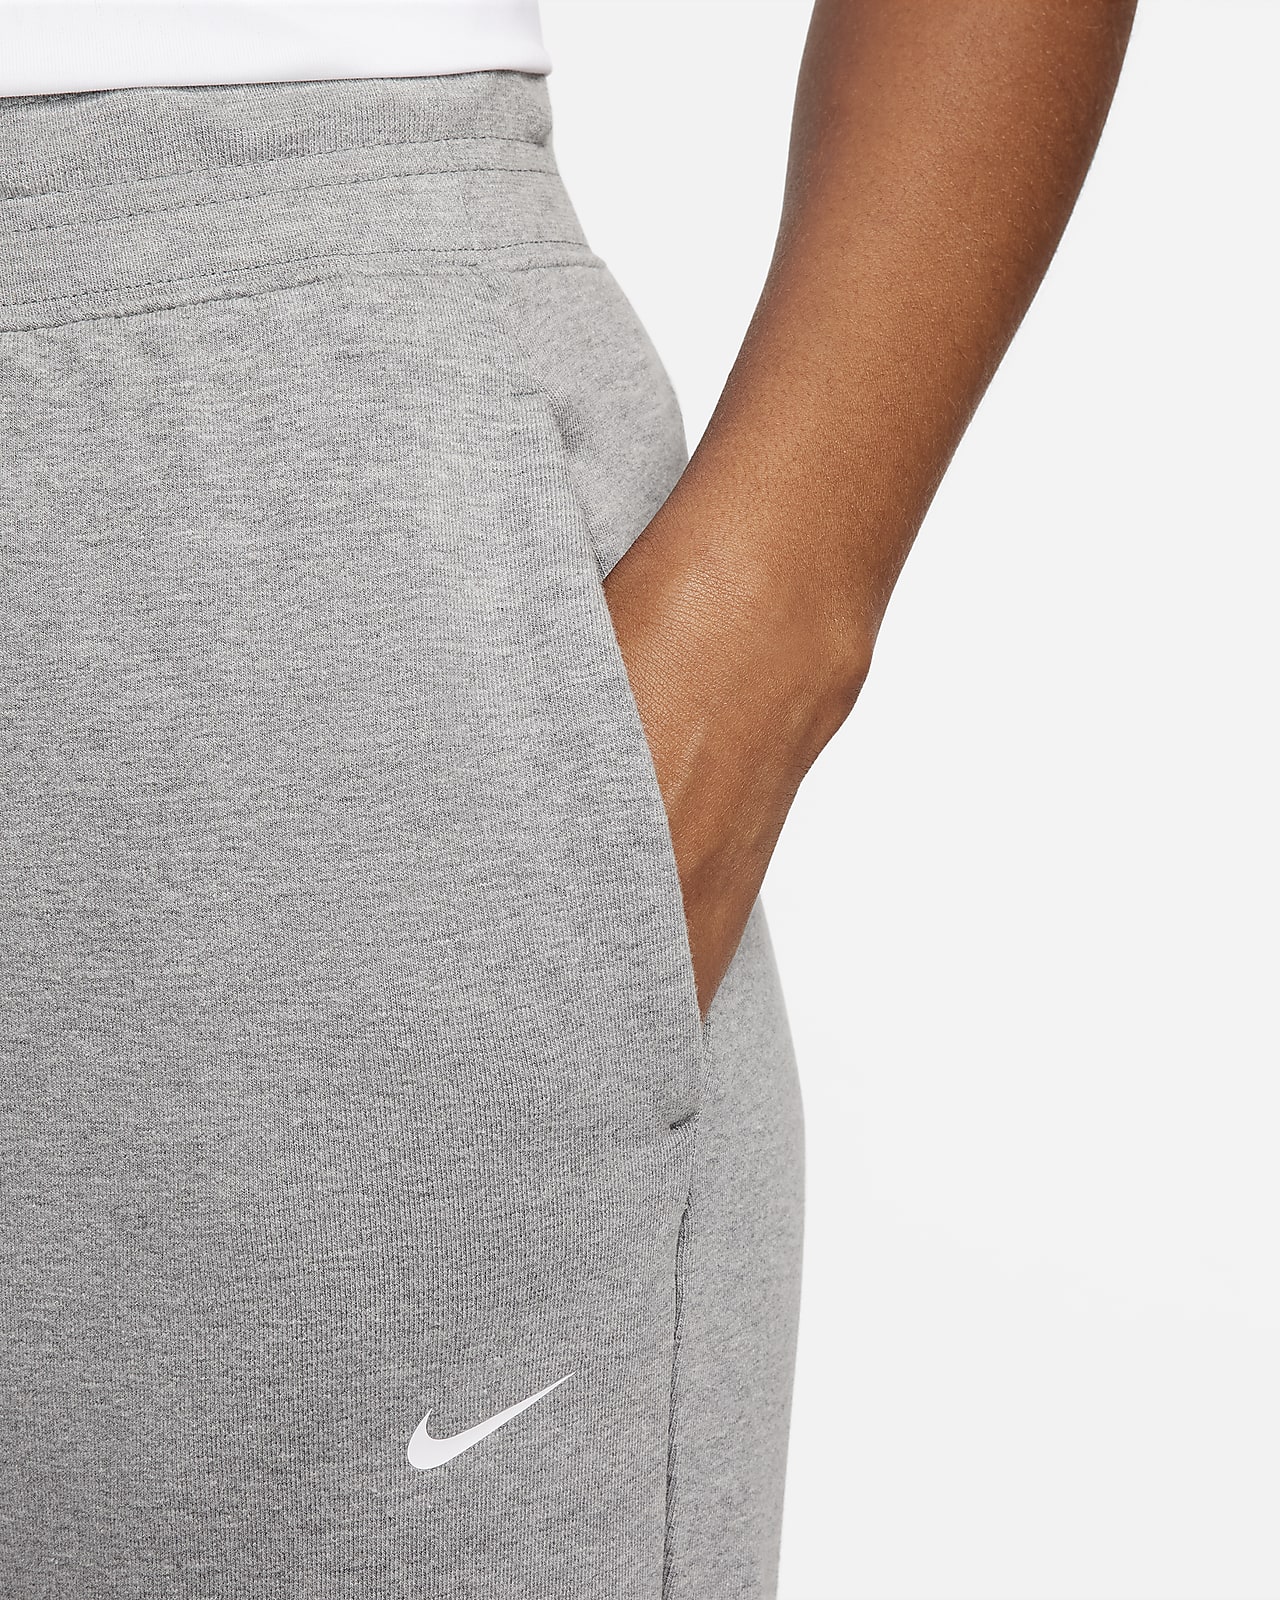 Nike Tech DriFit Womens Size XS Capris / Leggings Black NEW With Tags